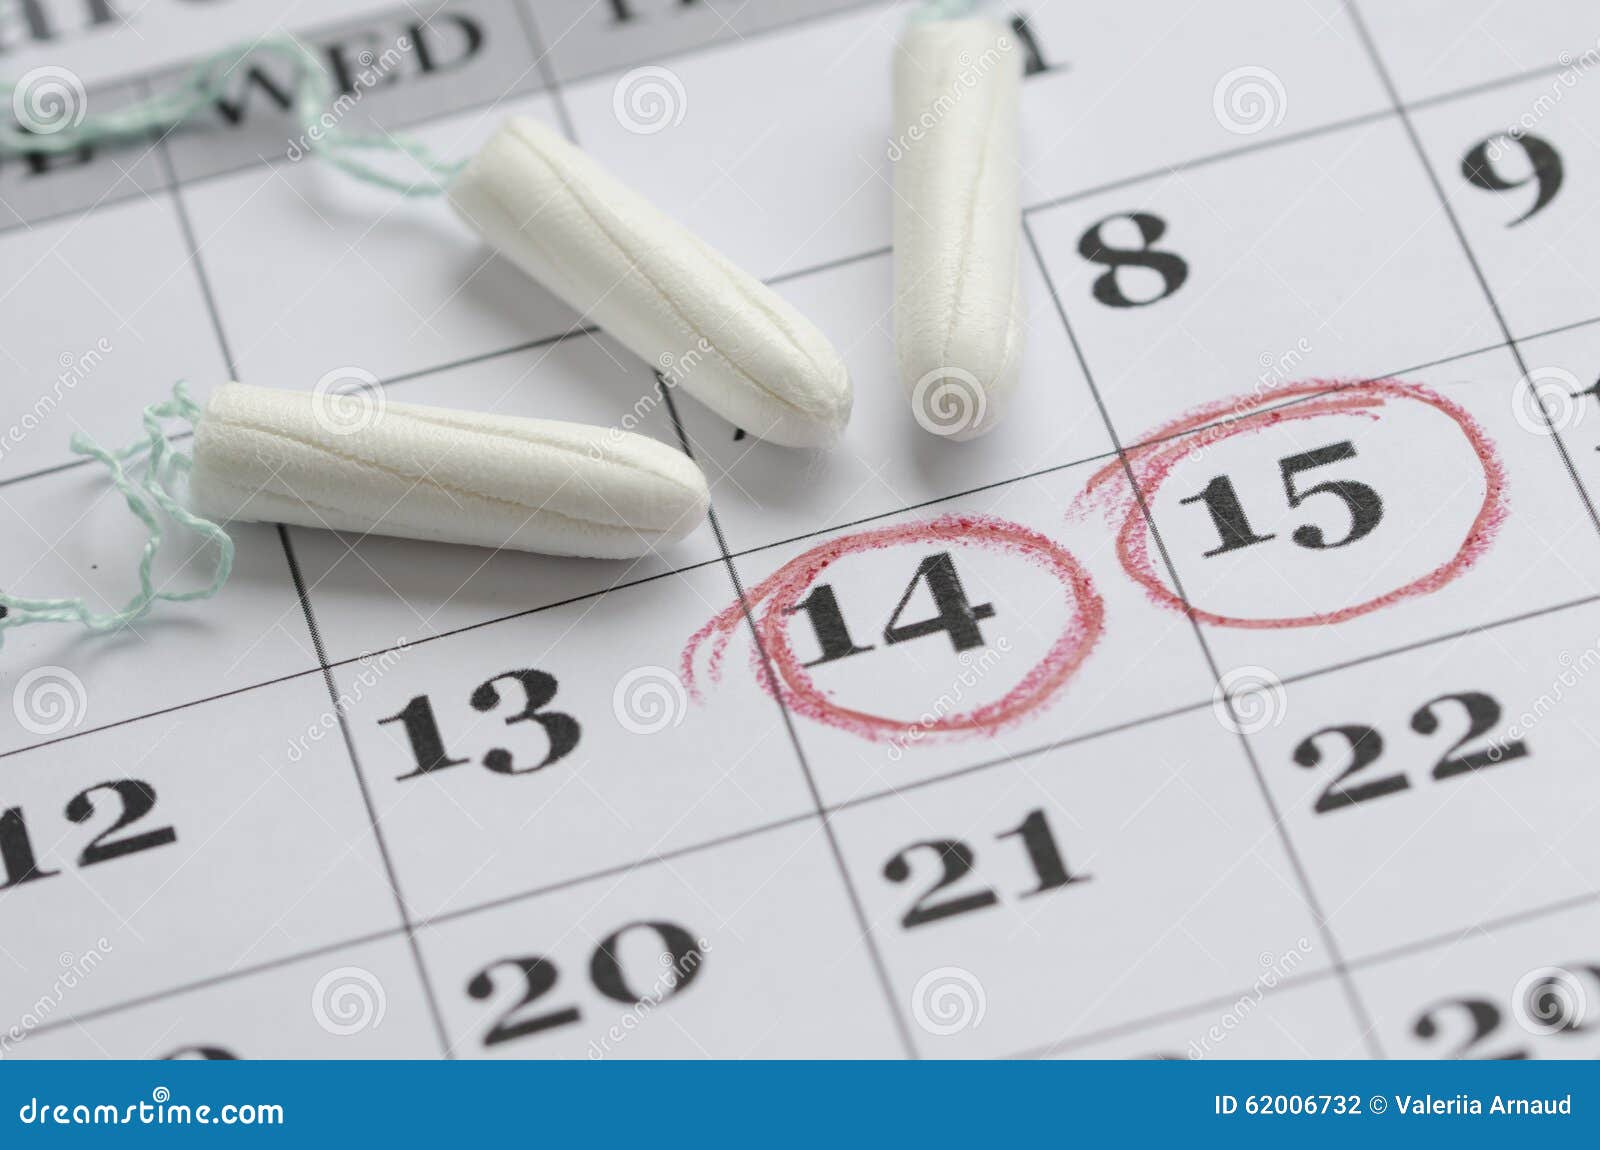 three tampons on the menstruation calendar